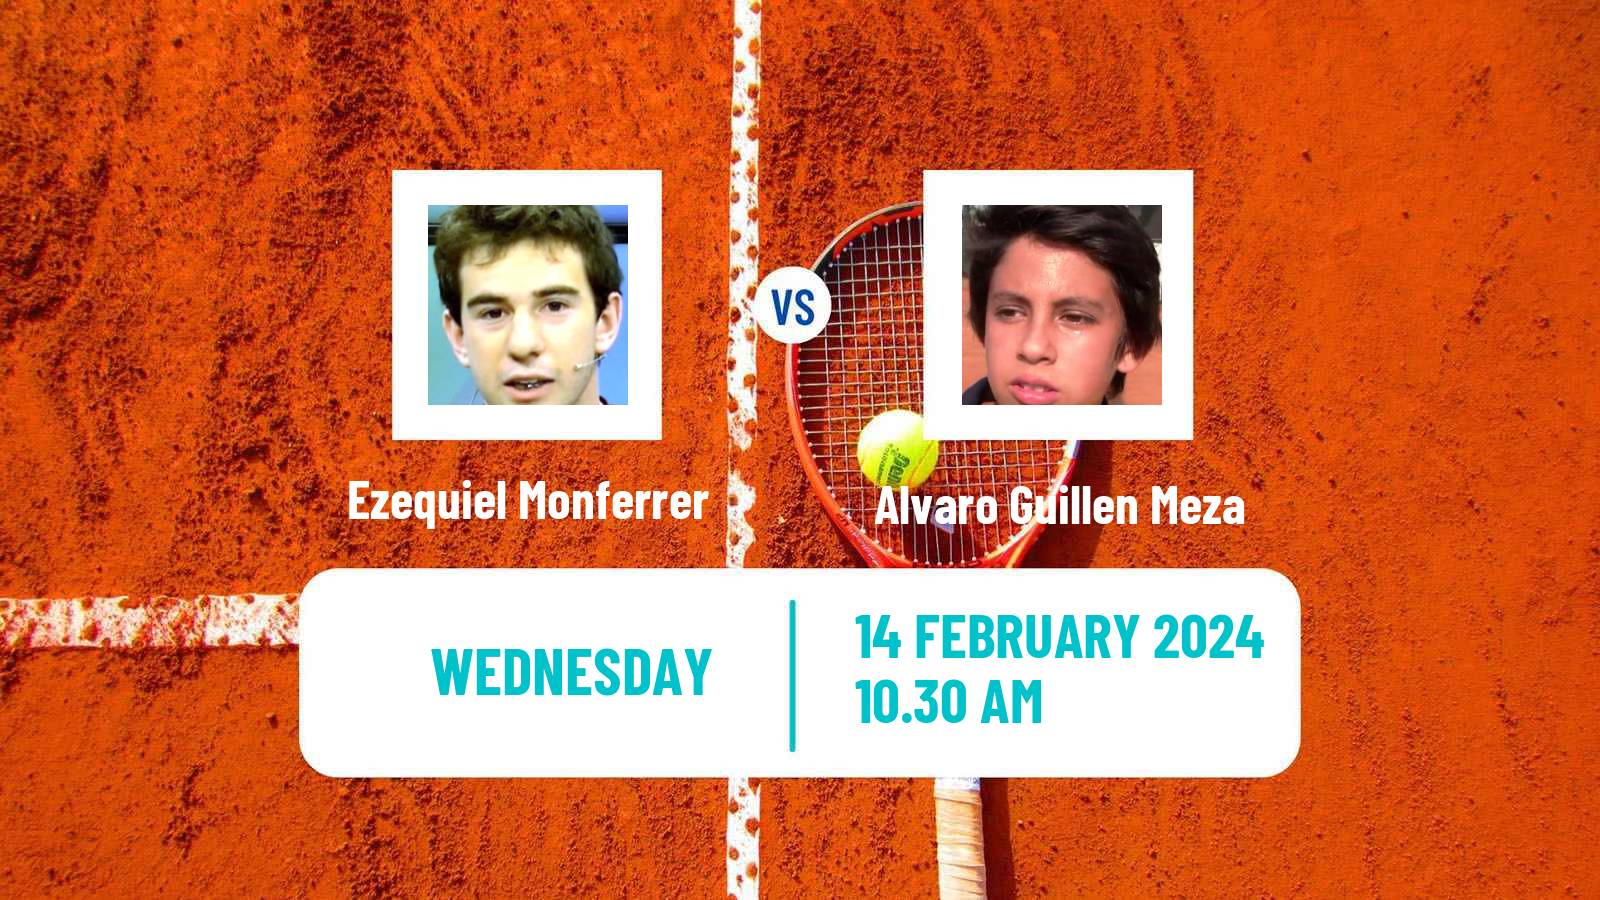 Tennis ITF M25 Punta Del Este 2 Men Ezequiel Monferrer - Alvaro Guillen Meza